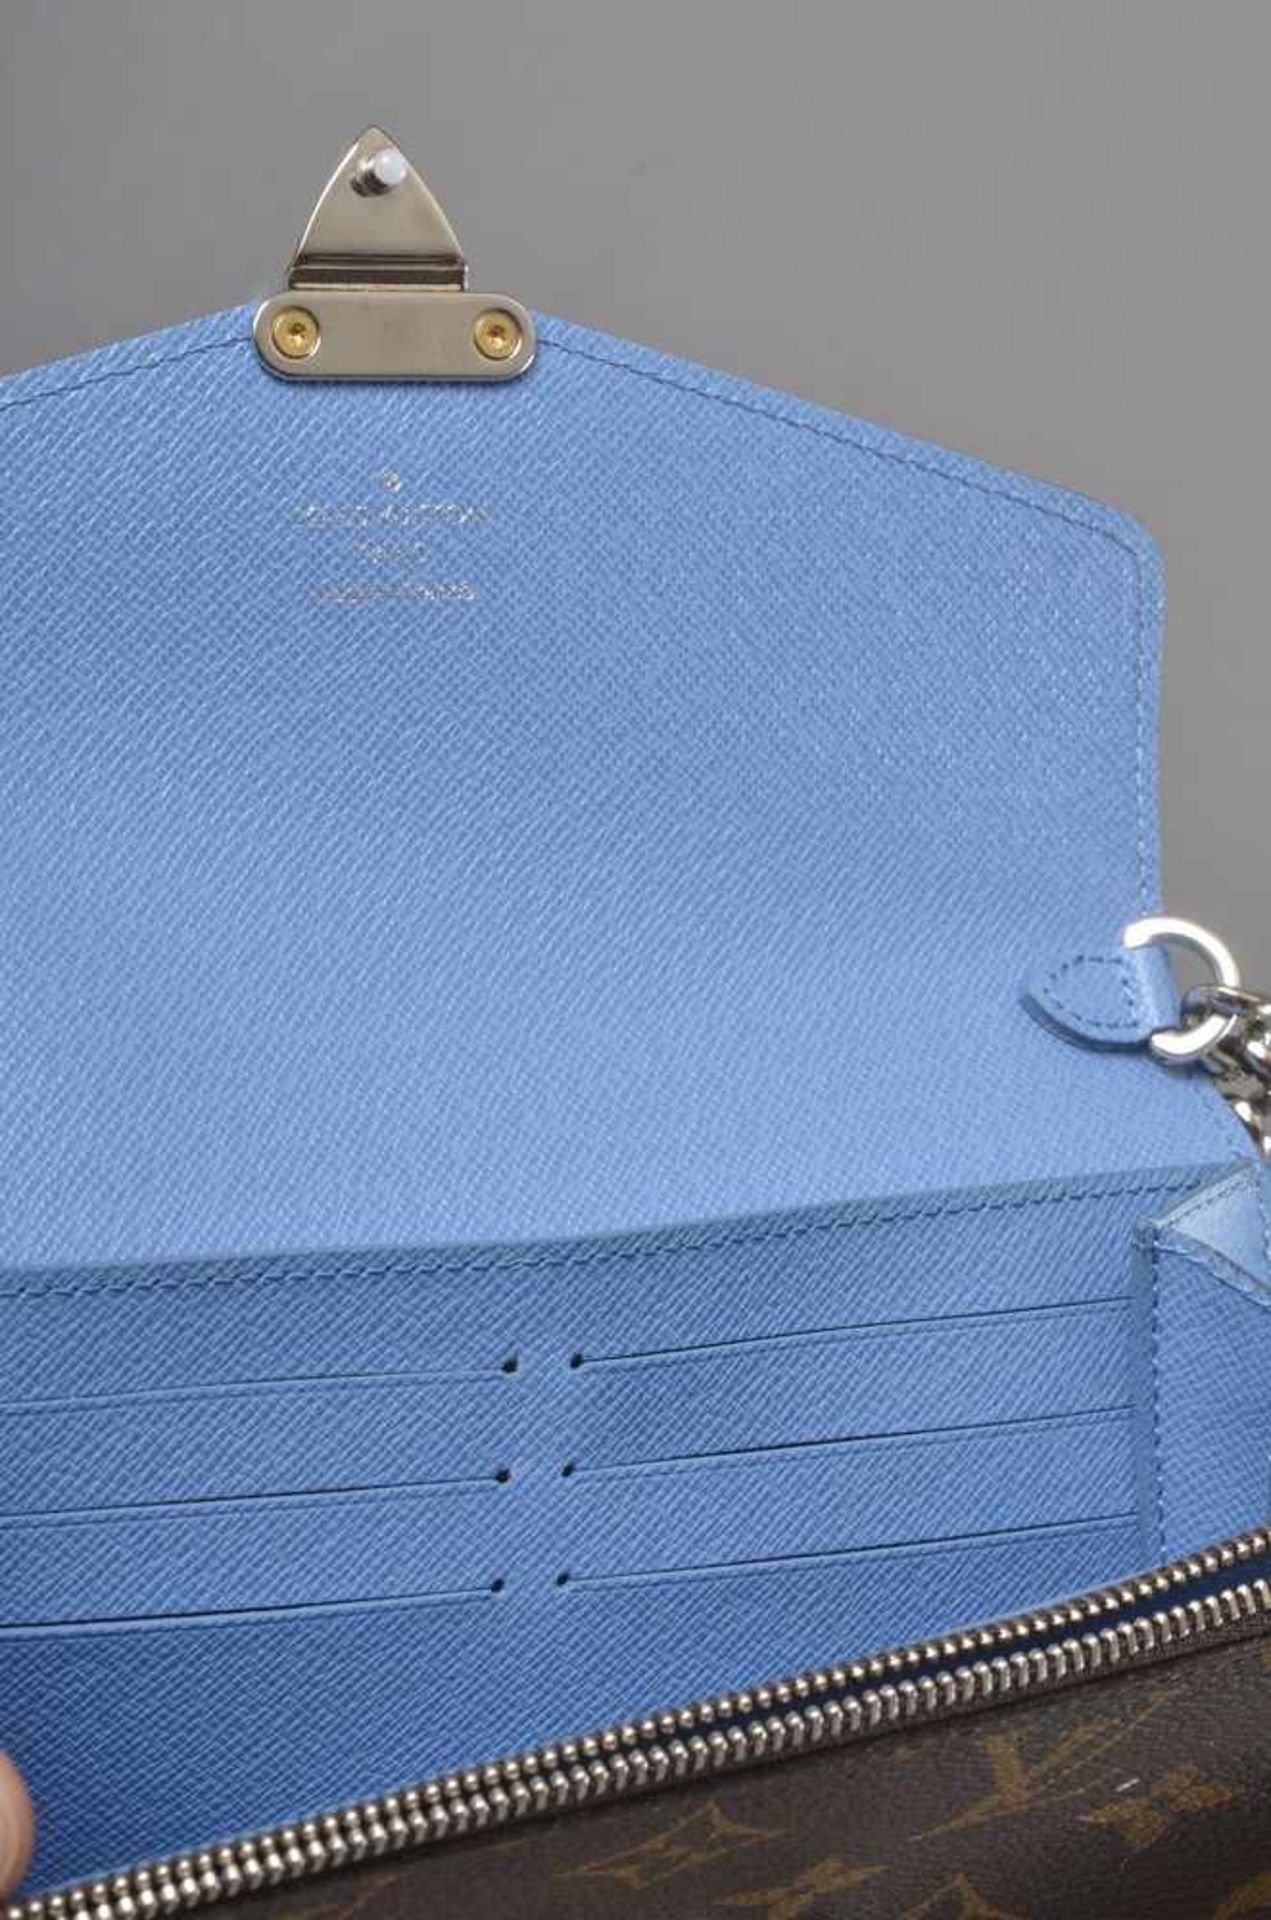 Louis Vuitton "Chain Wallet" aus der "Tribal Masc Collection", blau, Nr. SP 4114, 12x19x3cm - Bild 2 aus 2